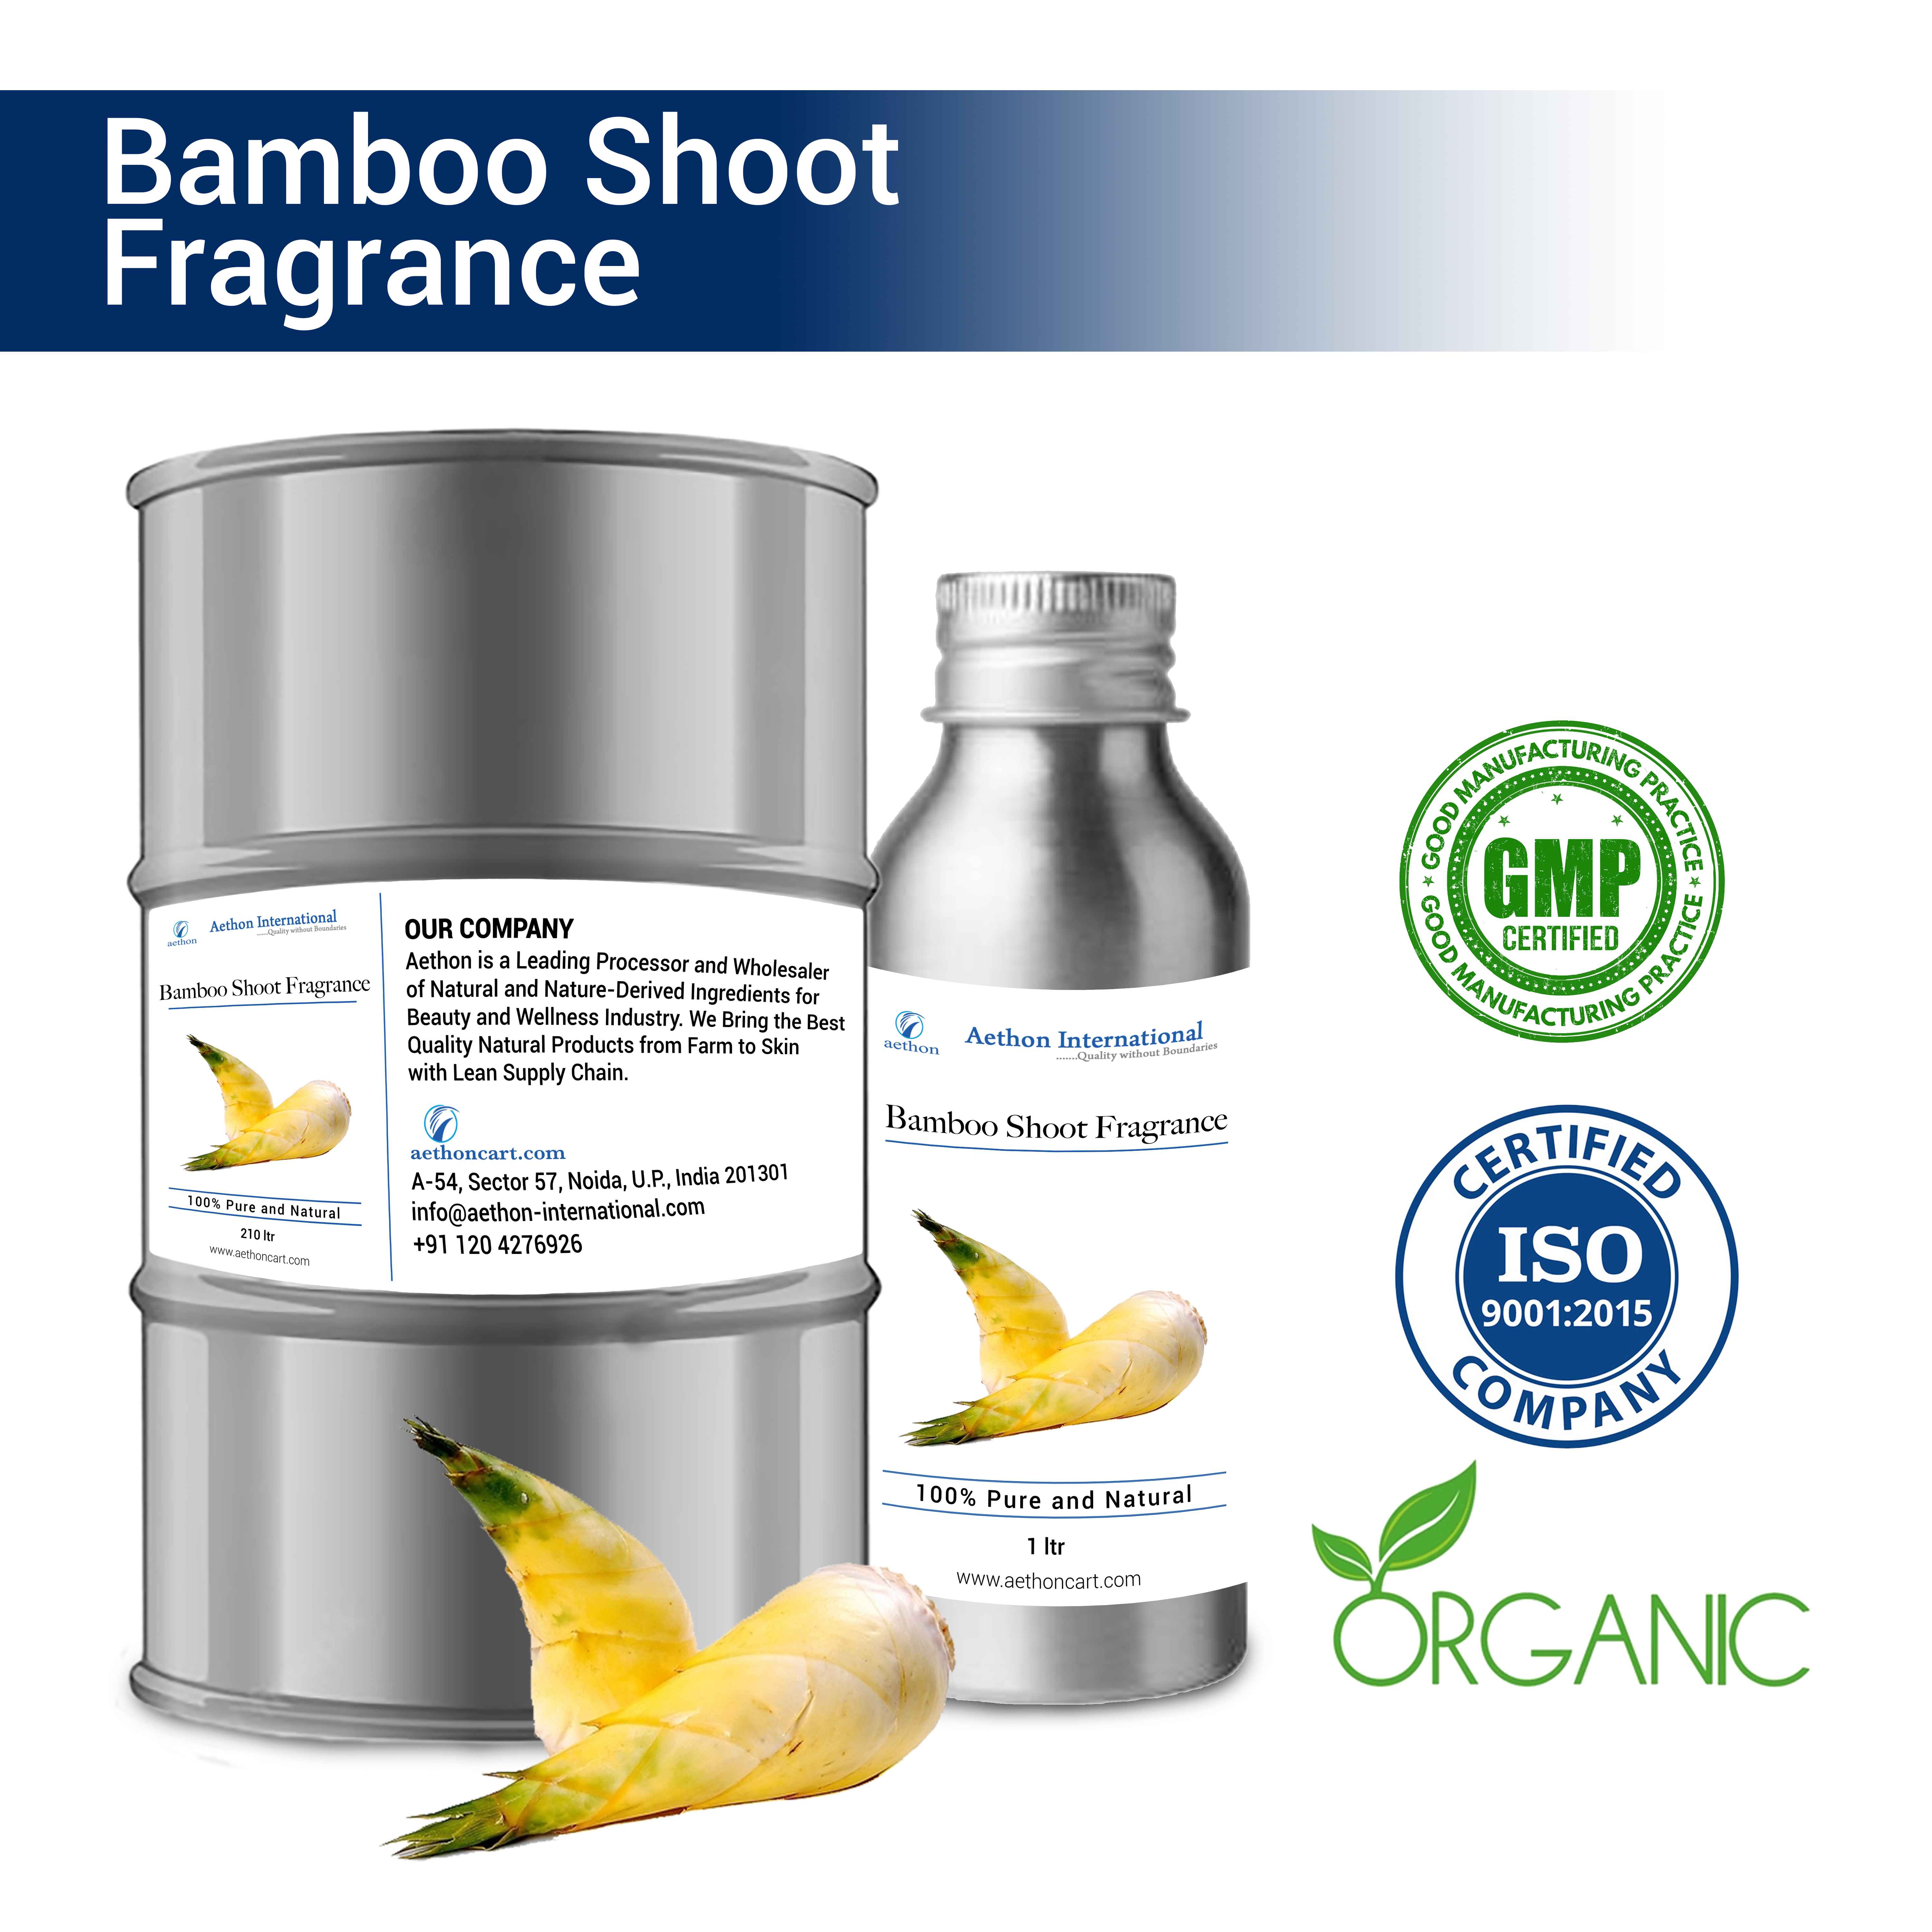 Bamboo Shoot Fragrance